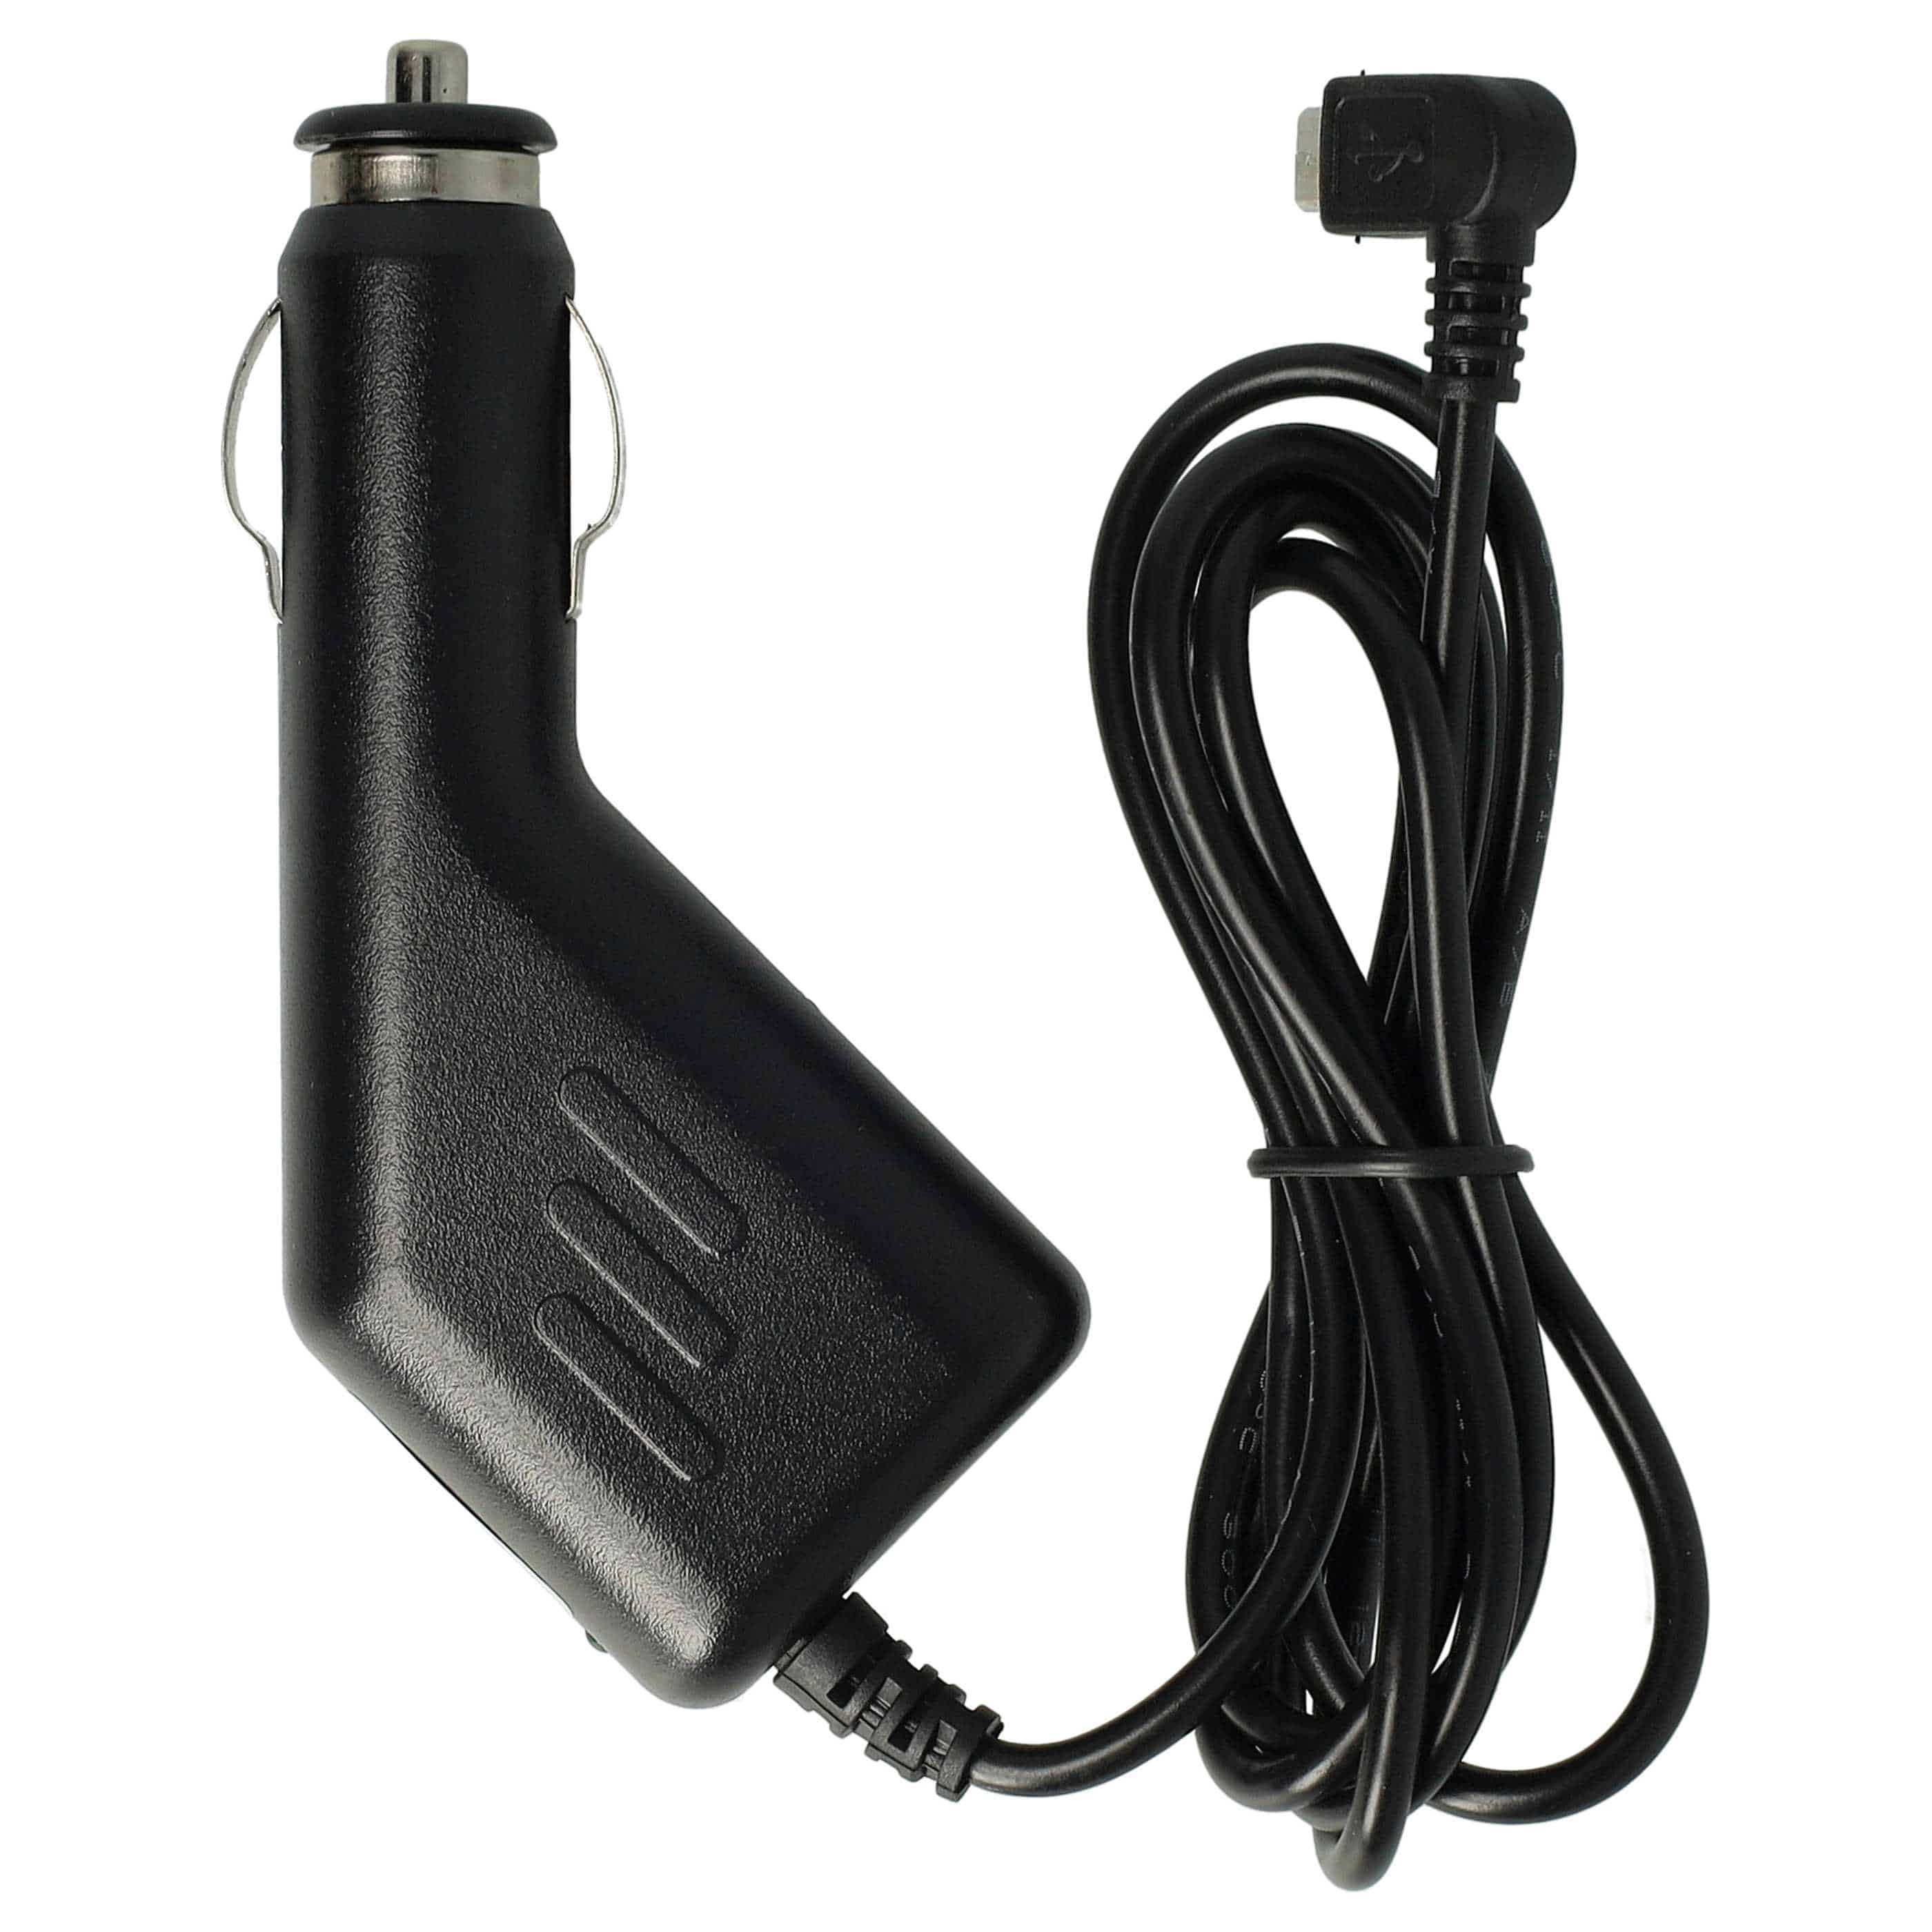 Micro-USB Autoladekabel 1,0 A passend für Olympia Geräte wie Smartphone, GPS, Navi - Ladekabel, 90° Stecker